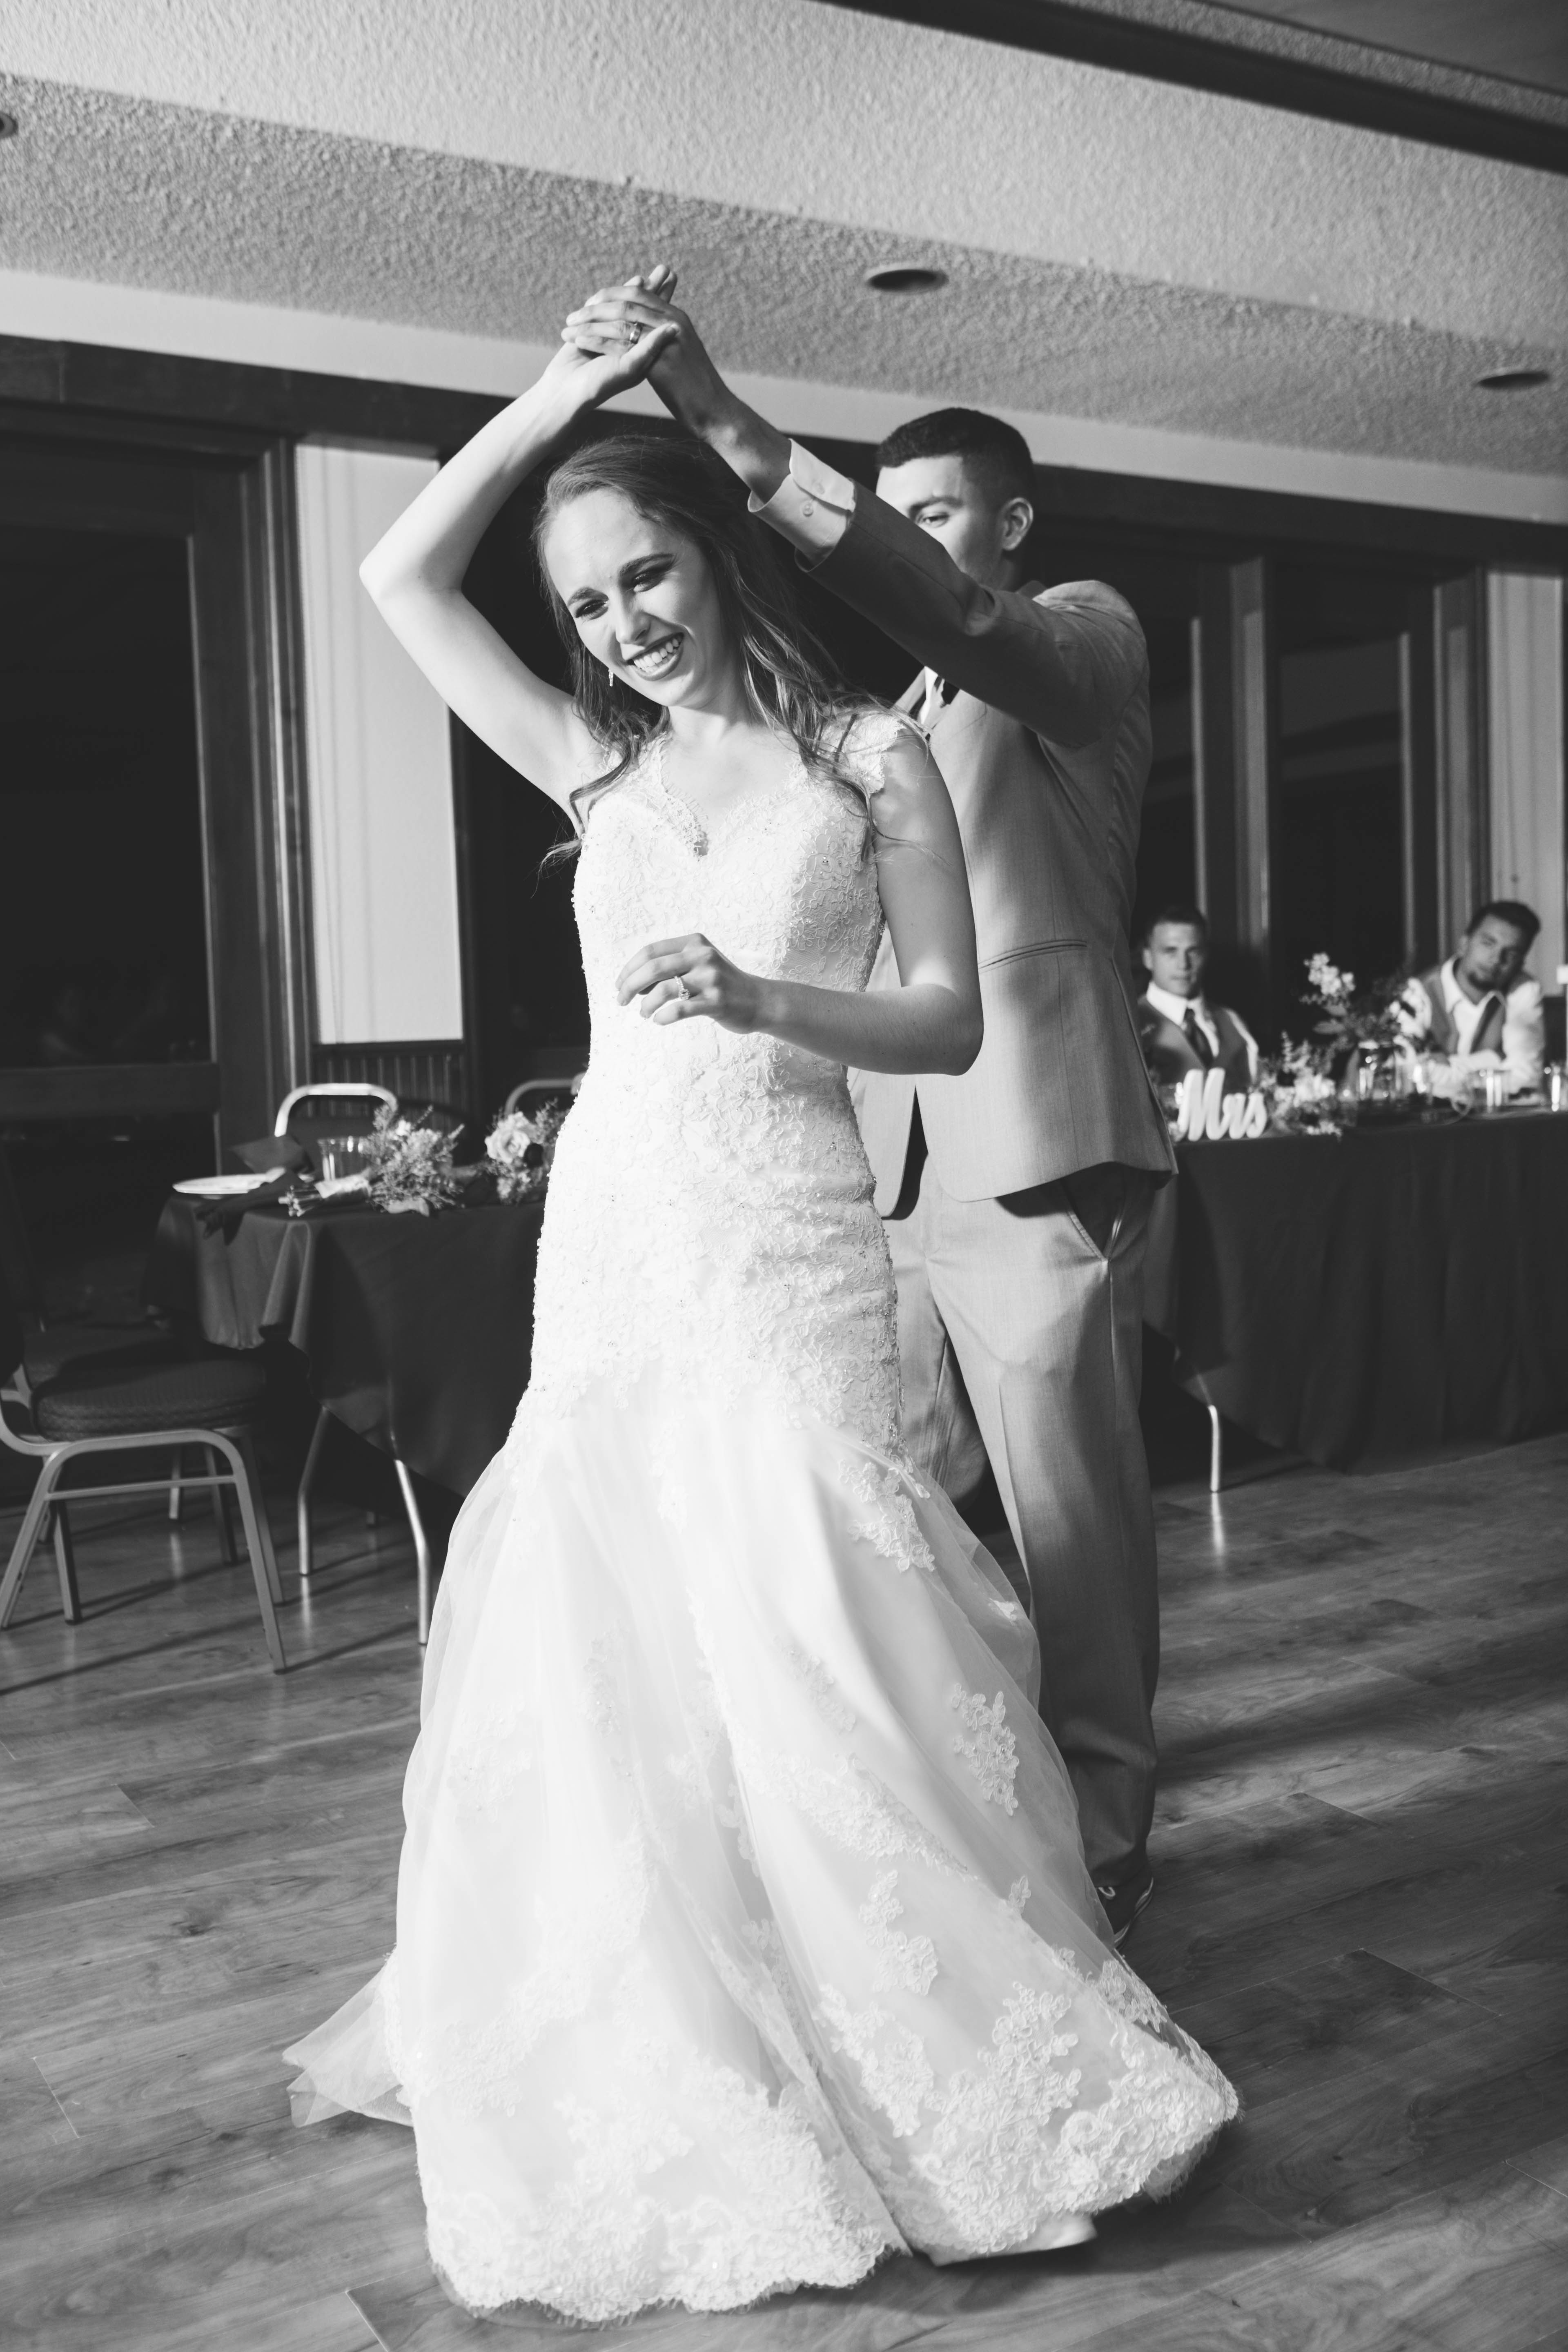 Bride laughs as groom twirls her